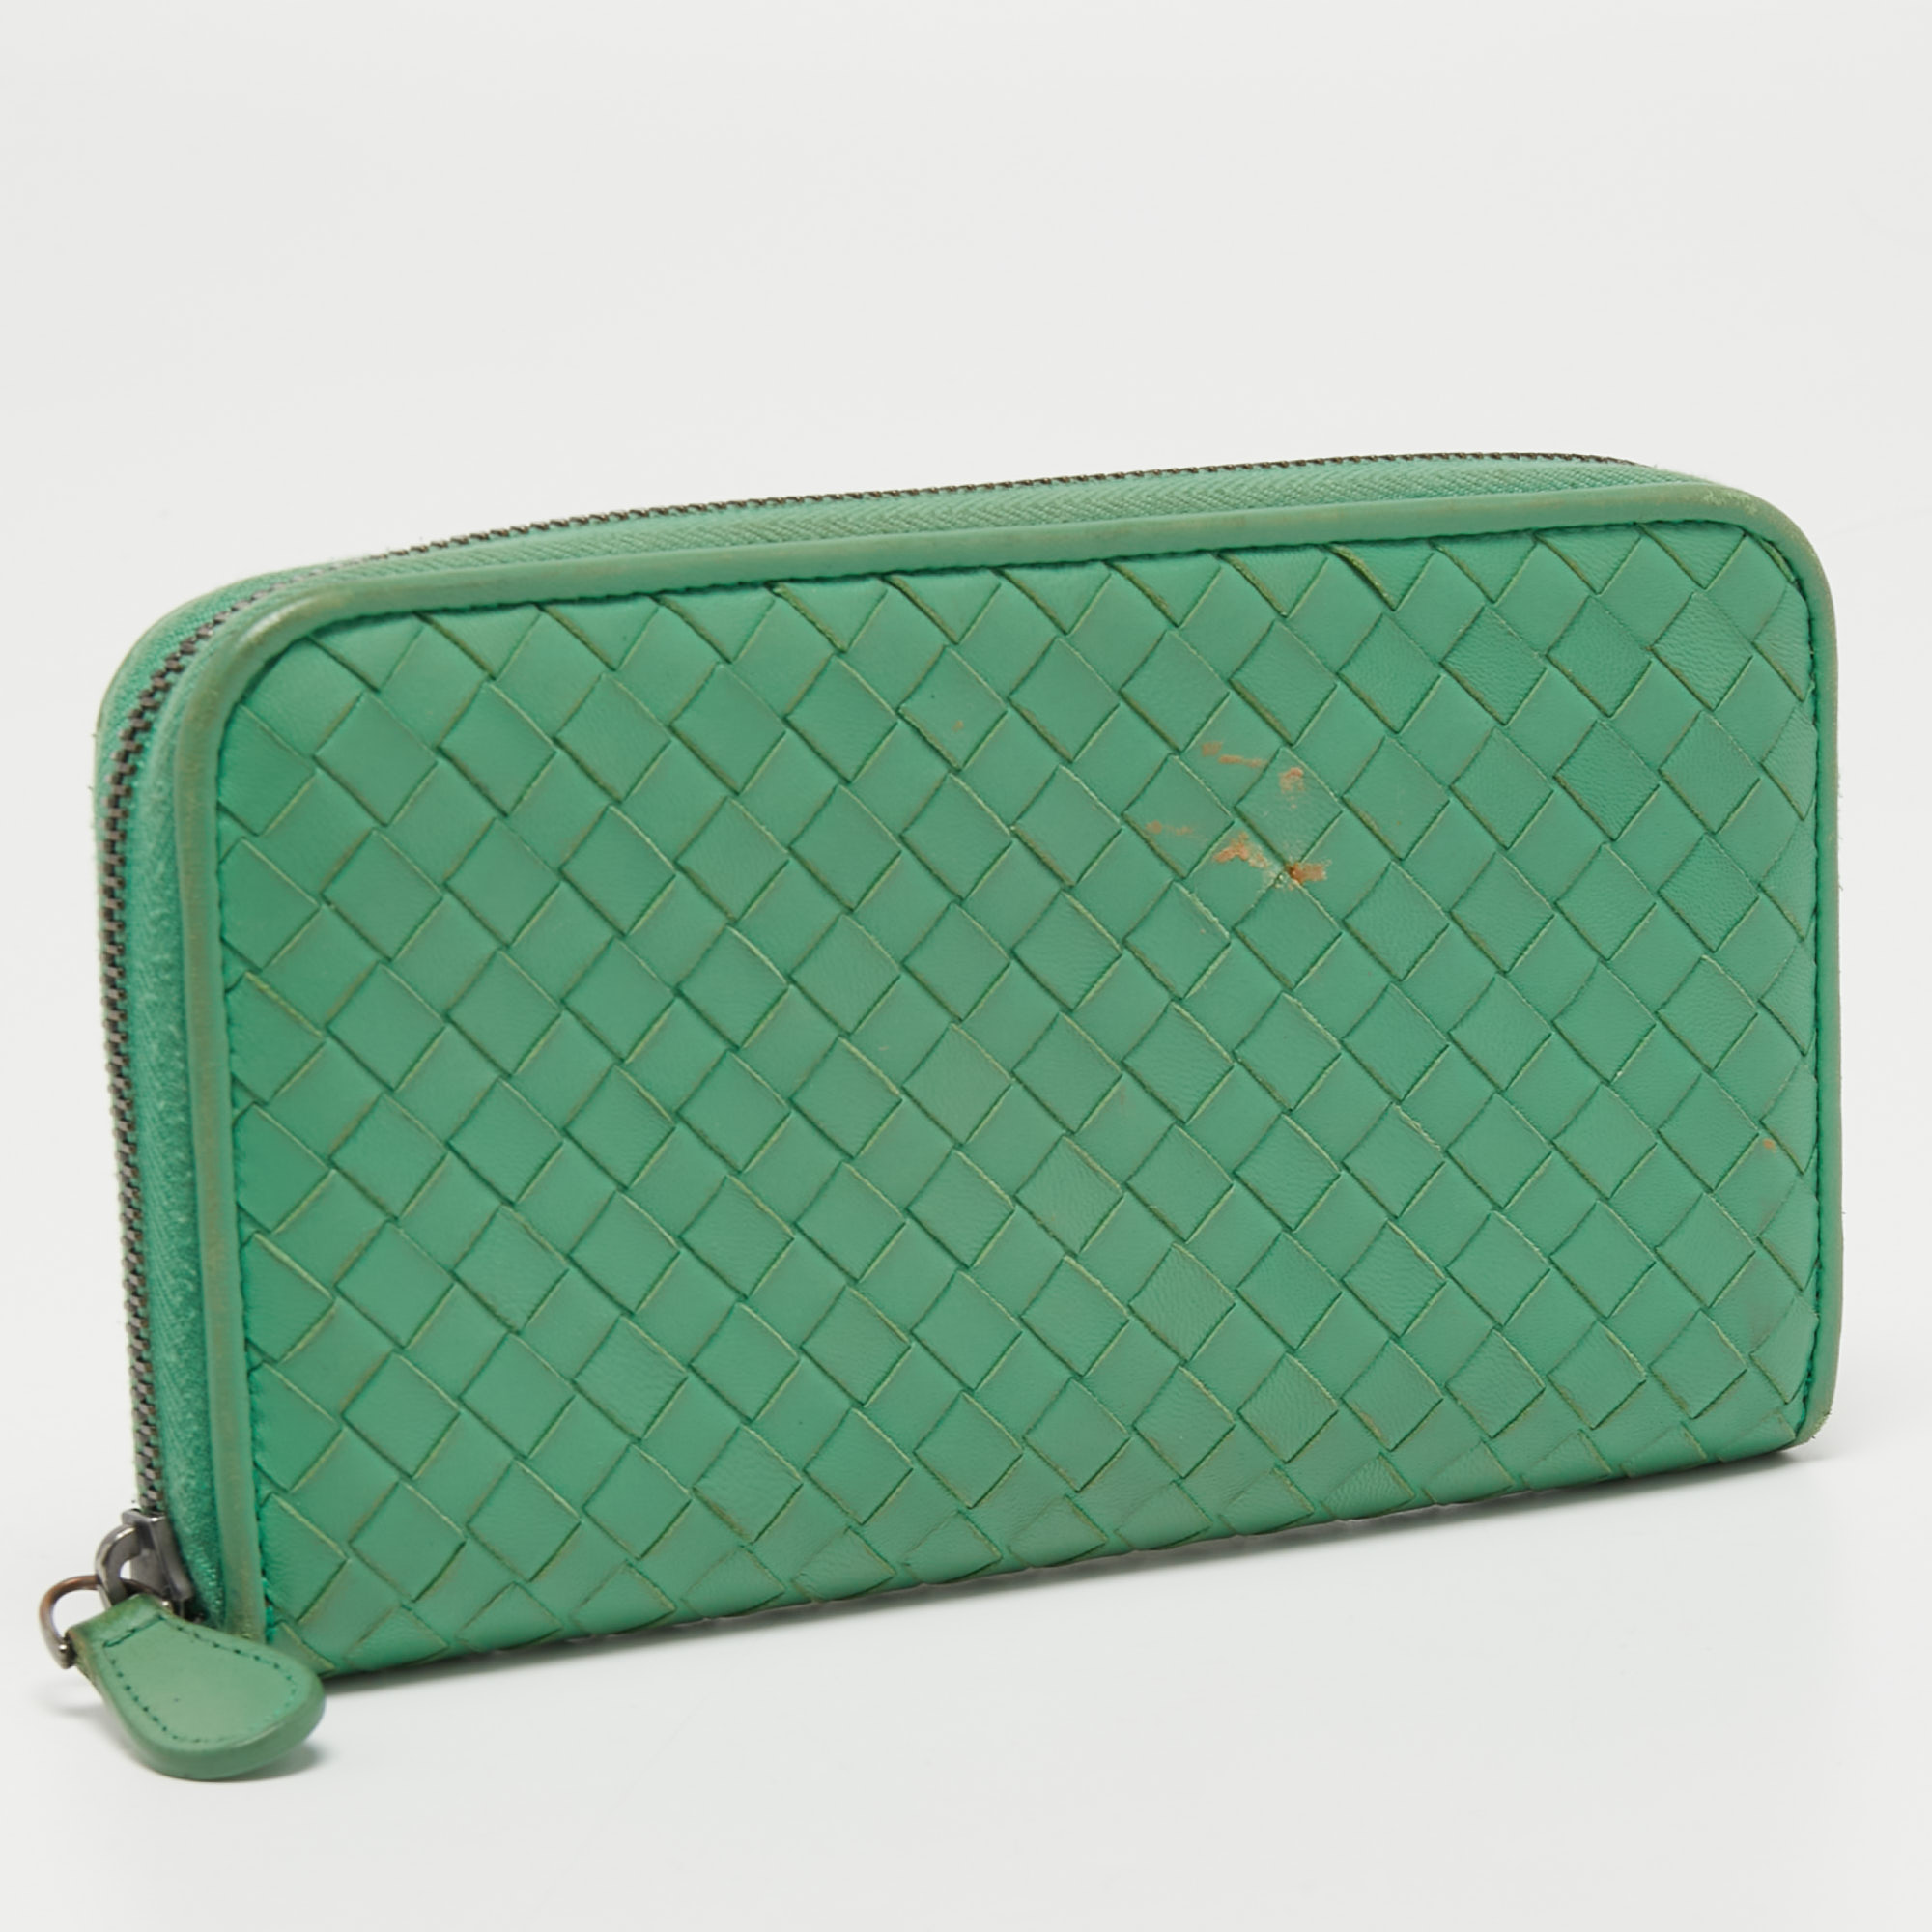 Bottega Veneta Green Intrecciato Leather Zip Around Wallet